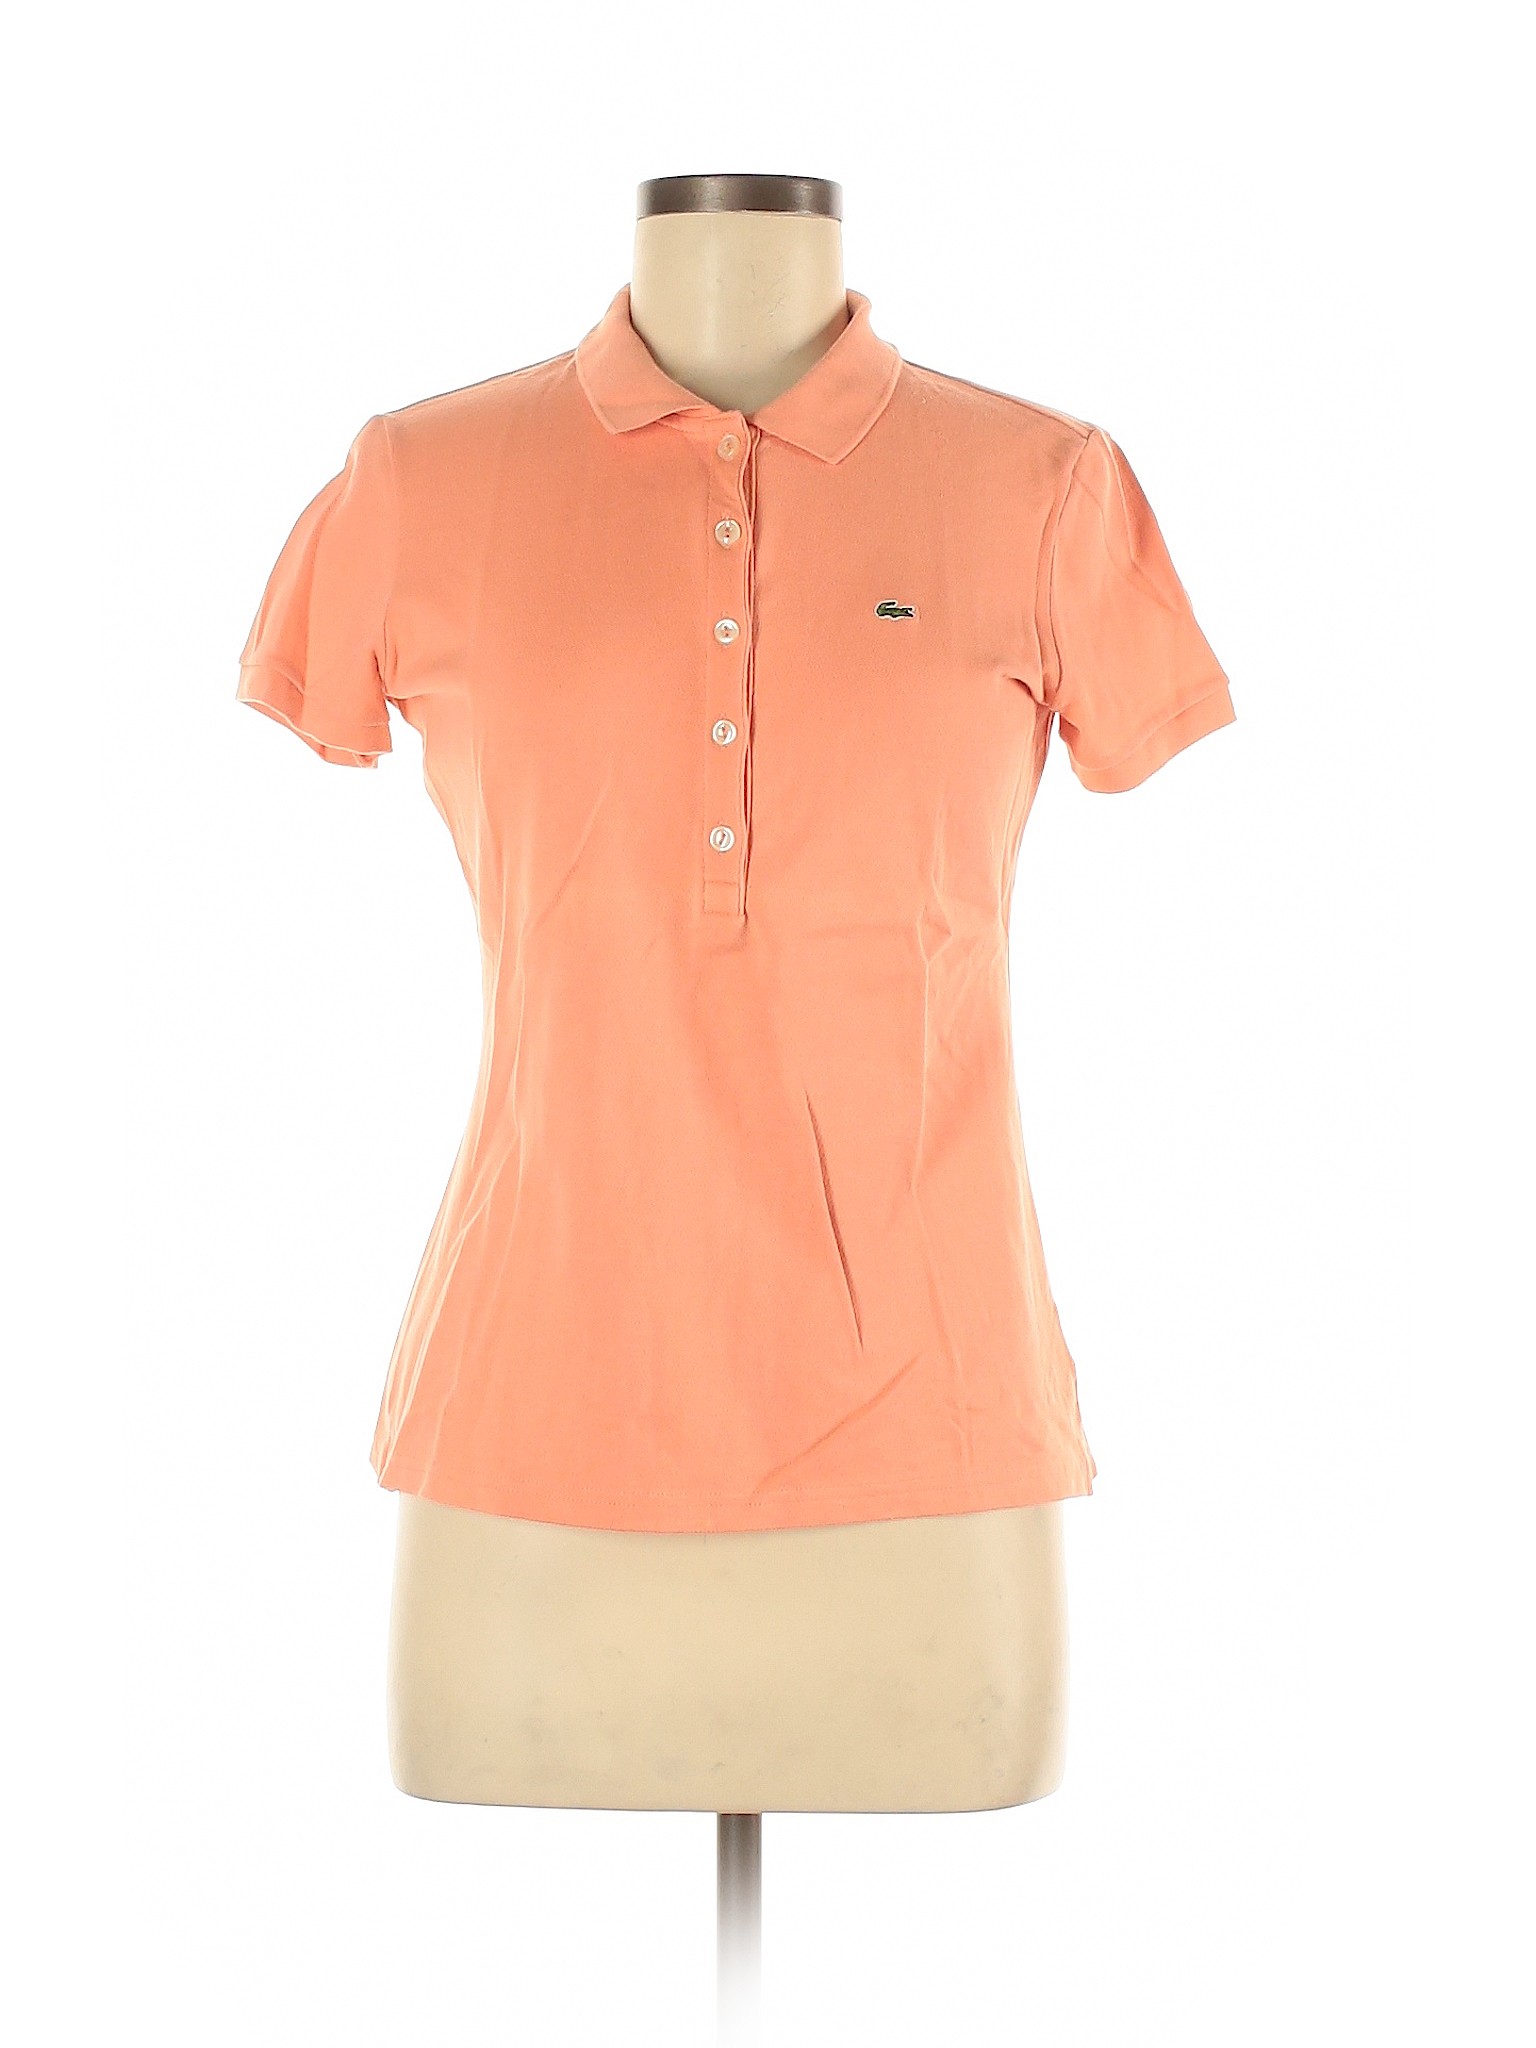 Lacoste Women Orange Short Sleeve Polo M | eBay